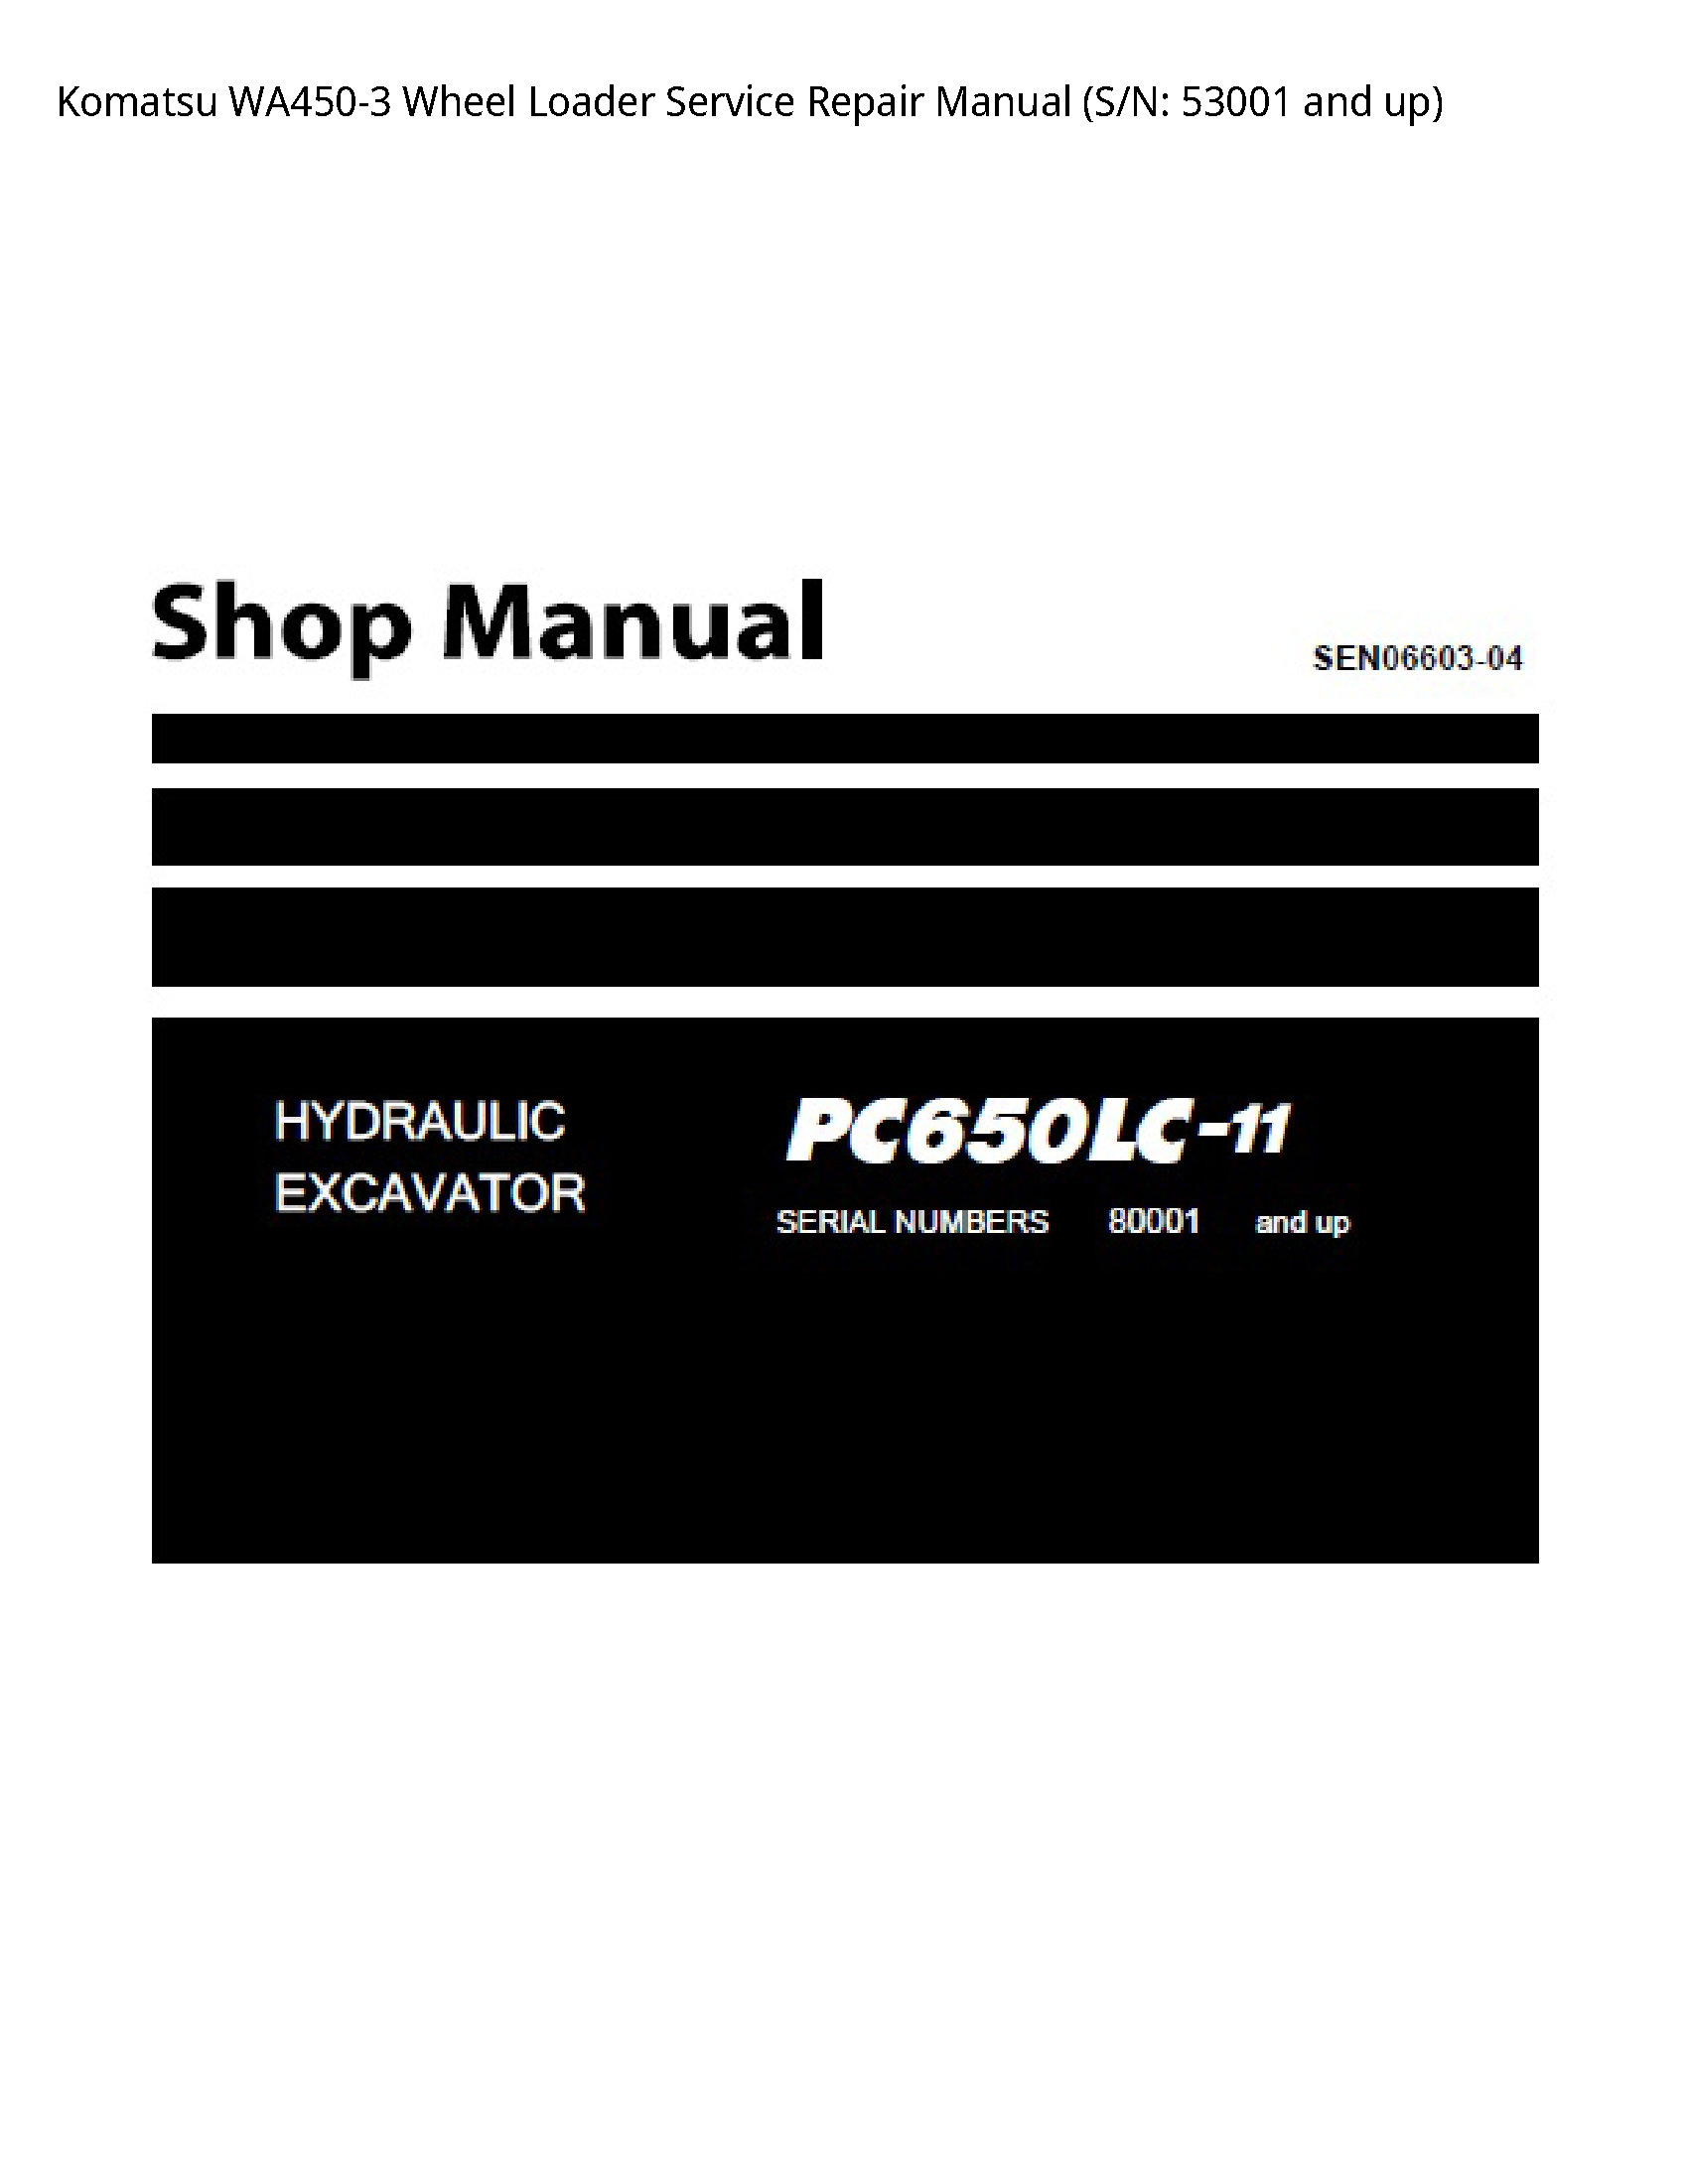 KOMATSU WA450-3 Wheel Loader manual